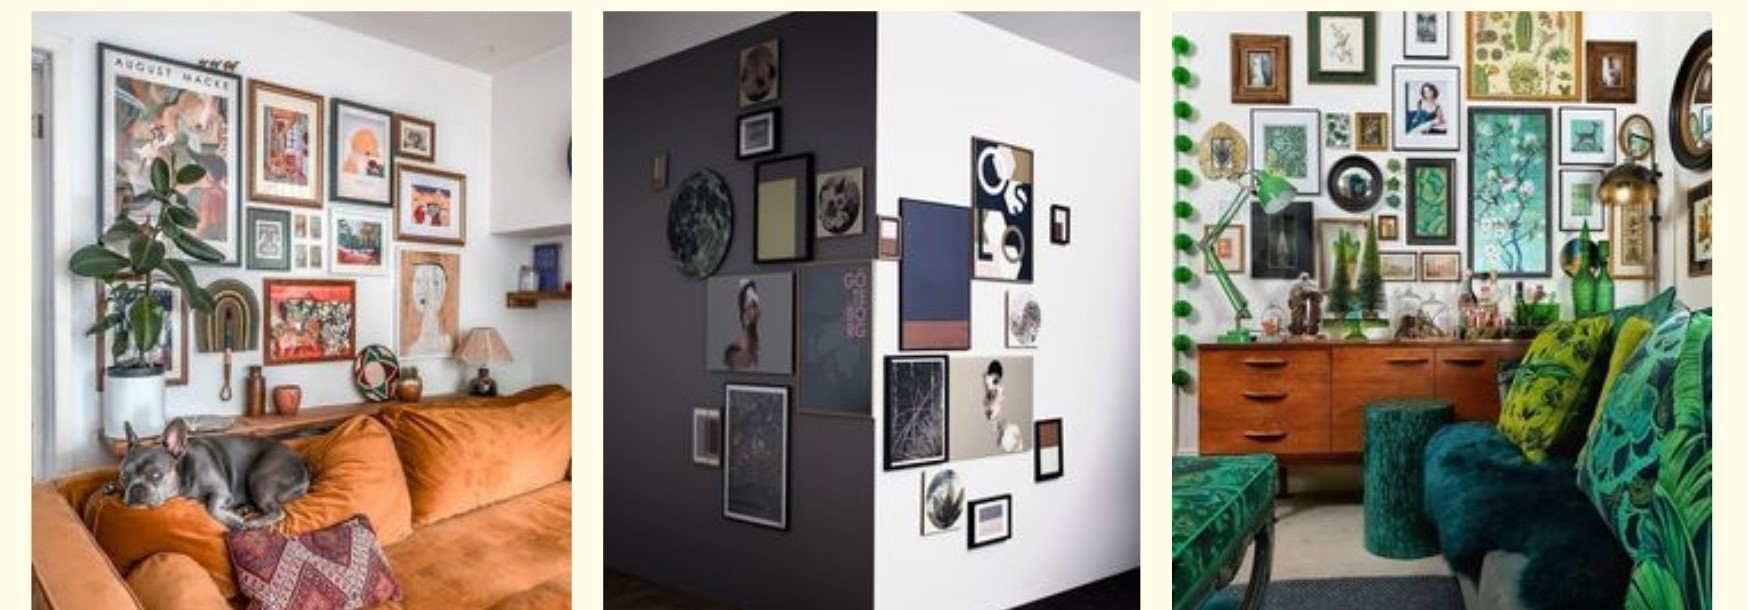 Wall decor Ideas - Gallery Wall